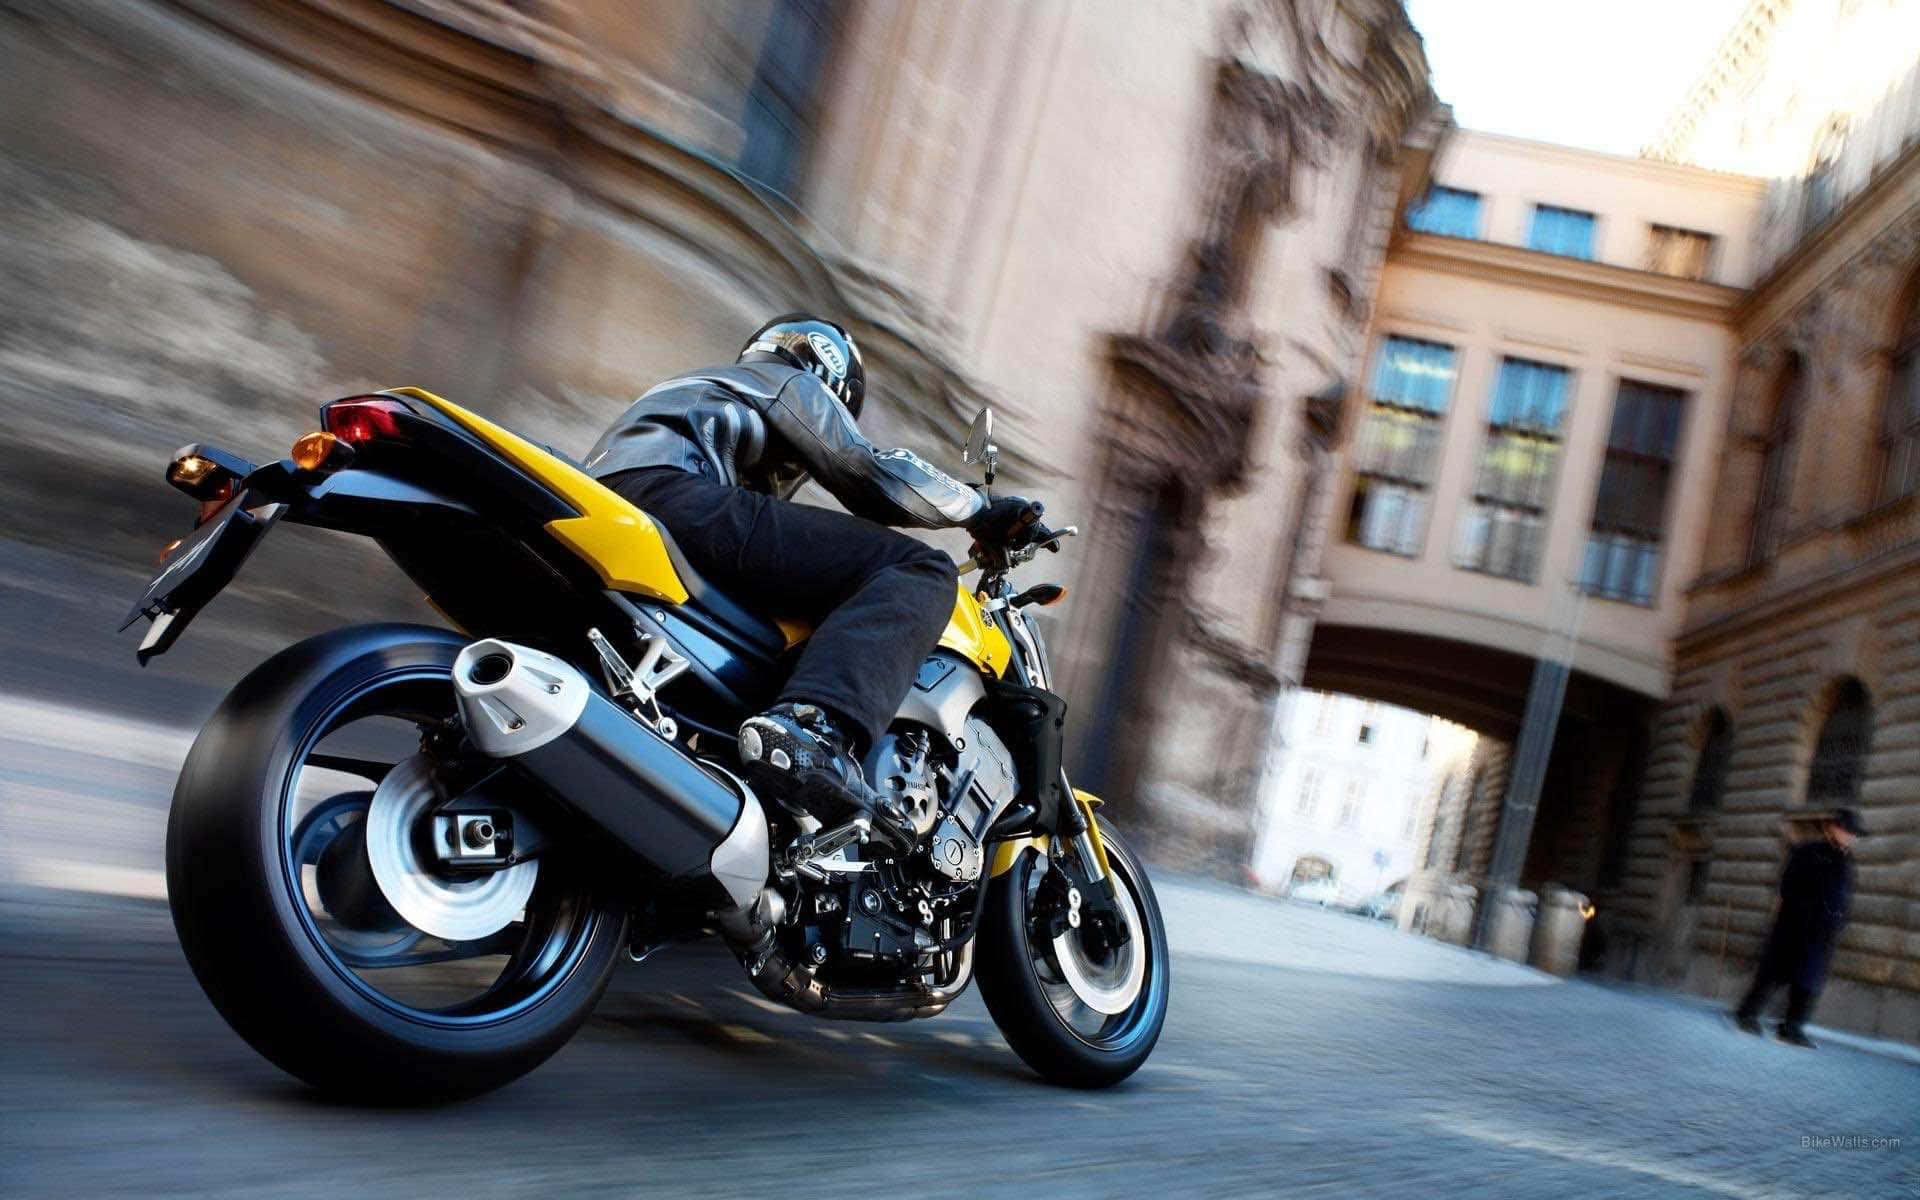 Thrilling Ride on a Speedy Motorbike